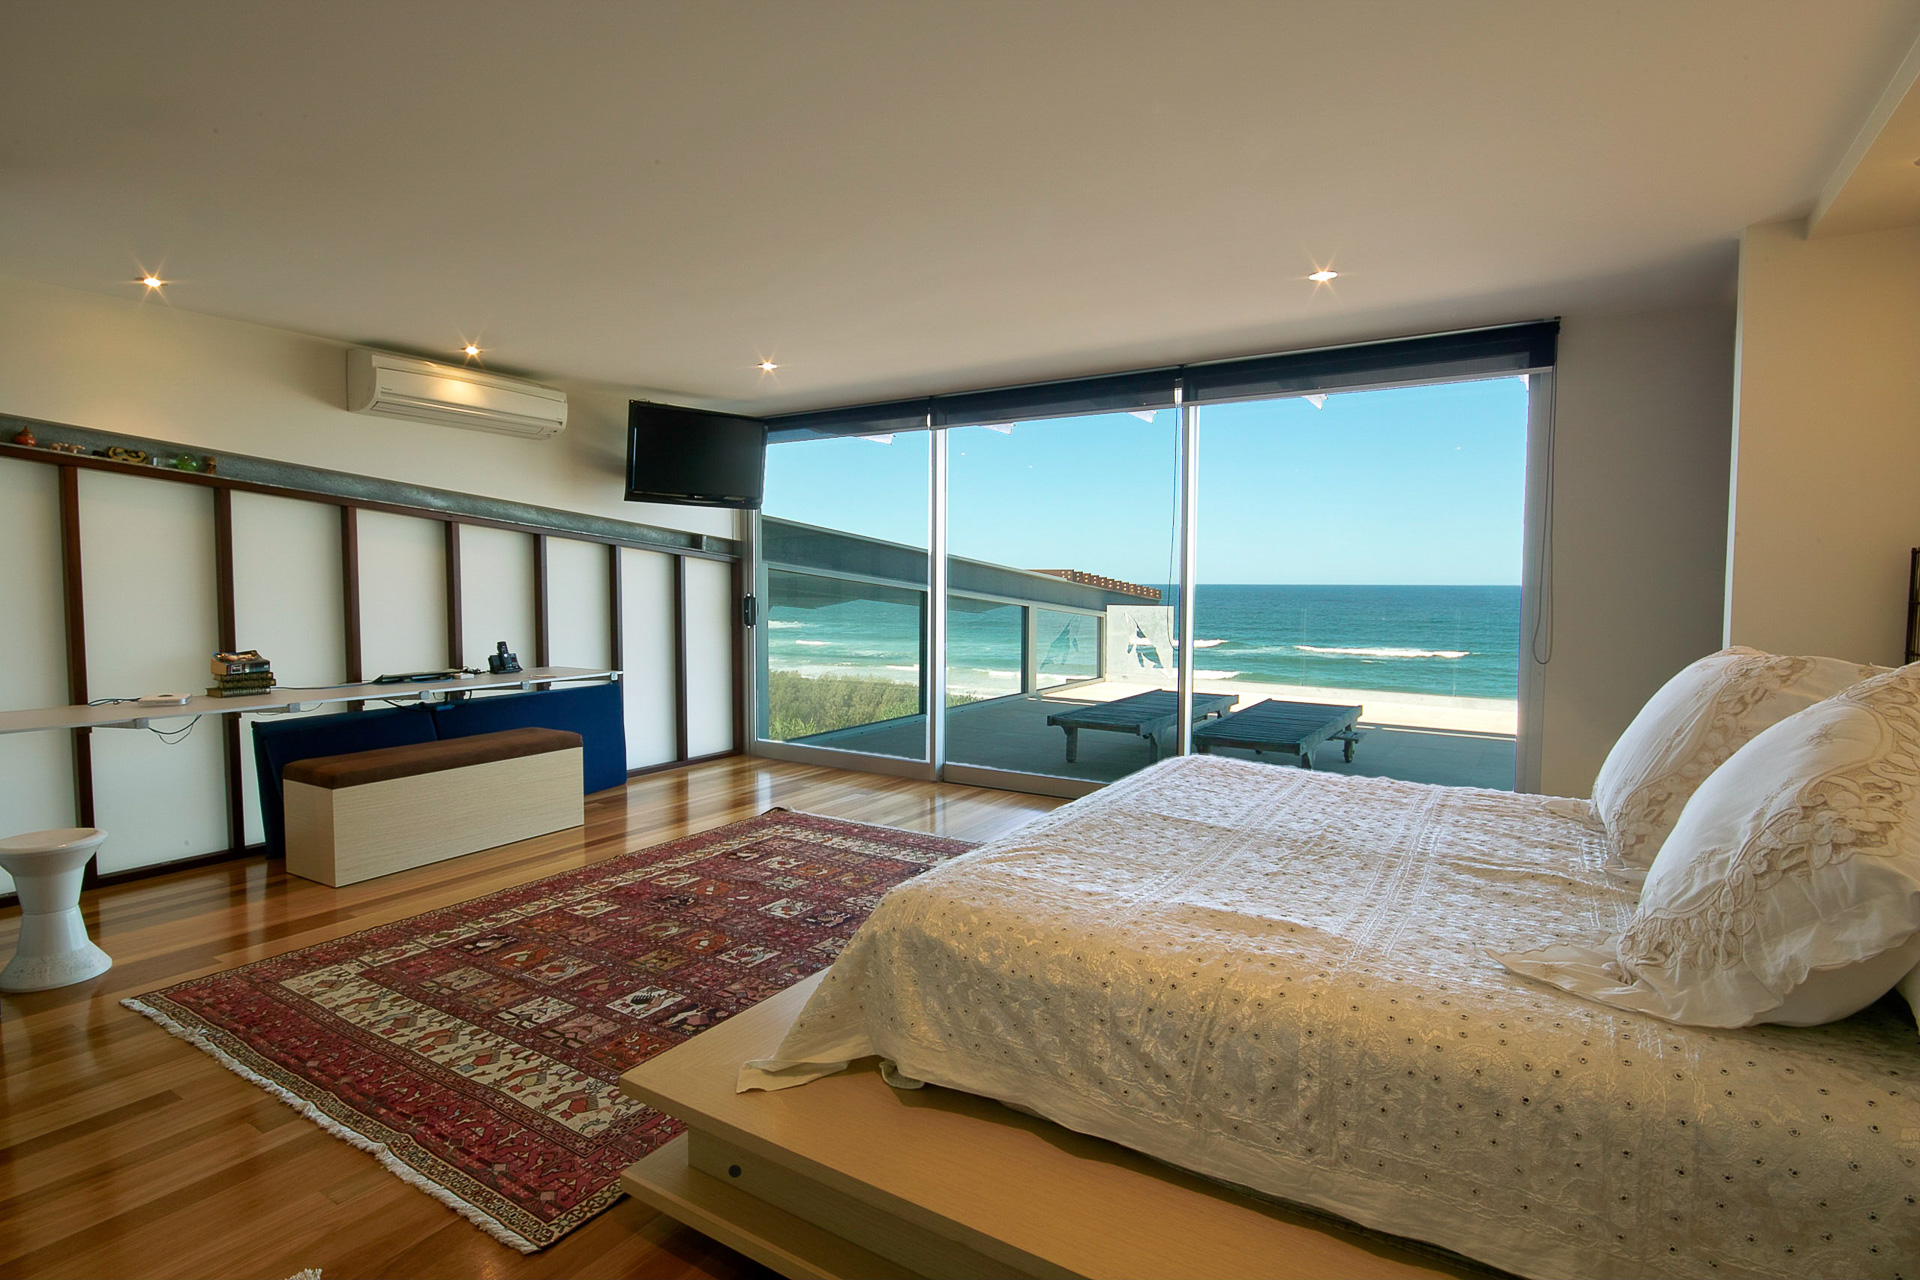 bedroom, custom made bed, new age veneer, industrial, beach views, interiors, minka joinery